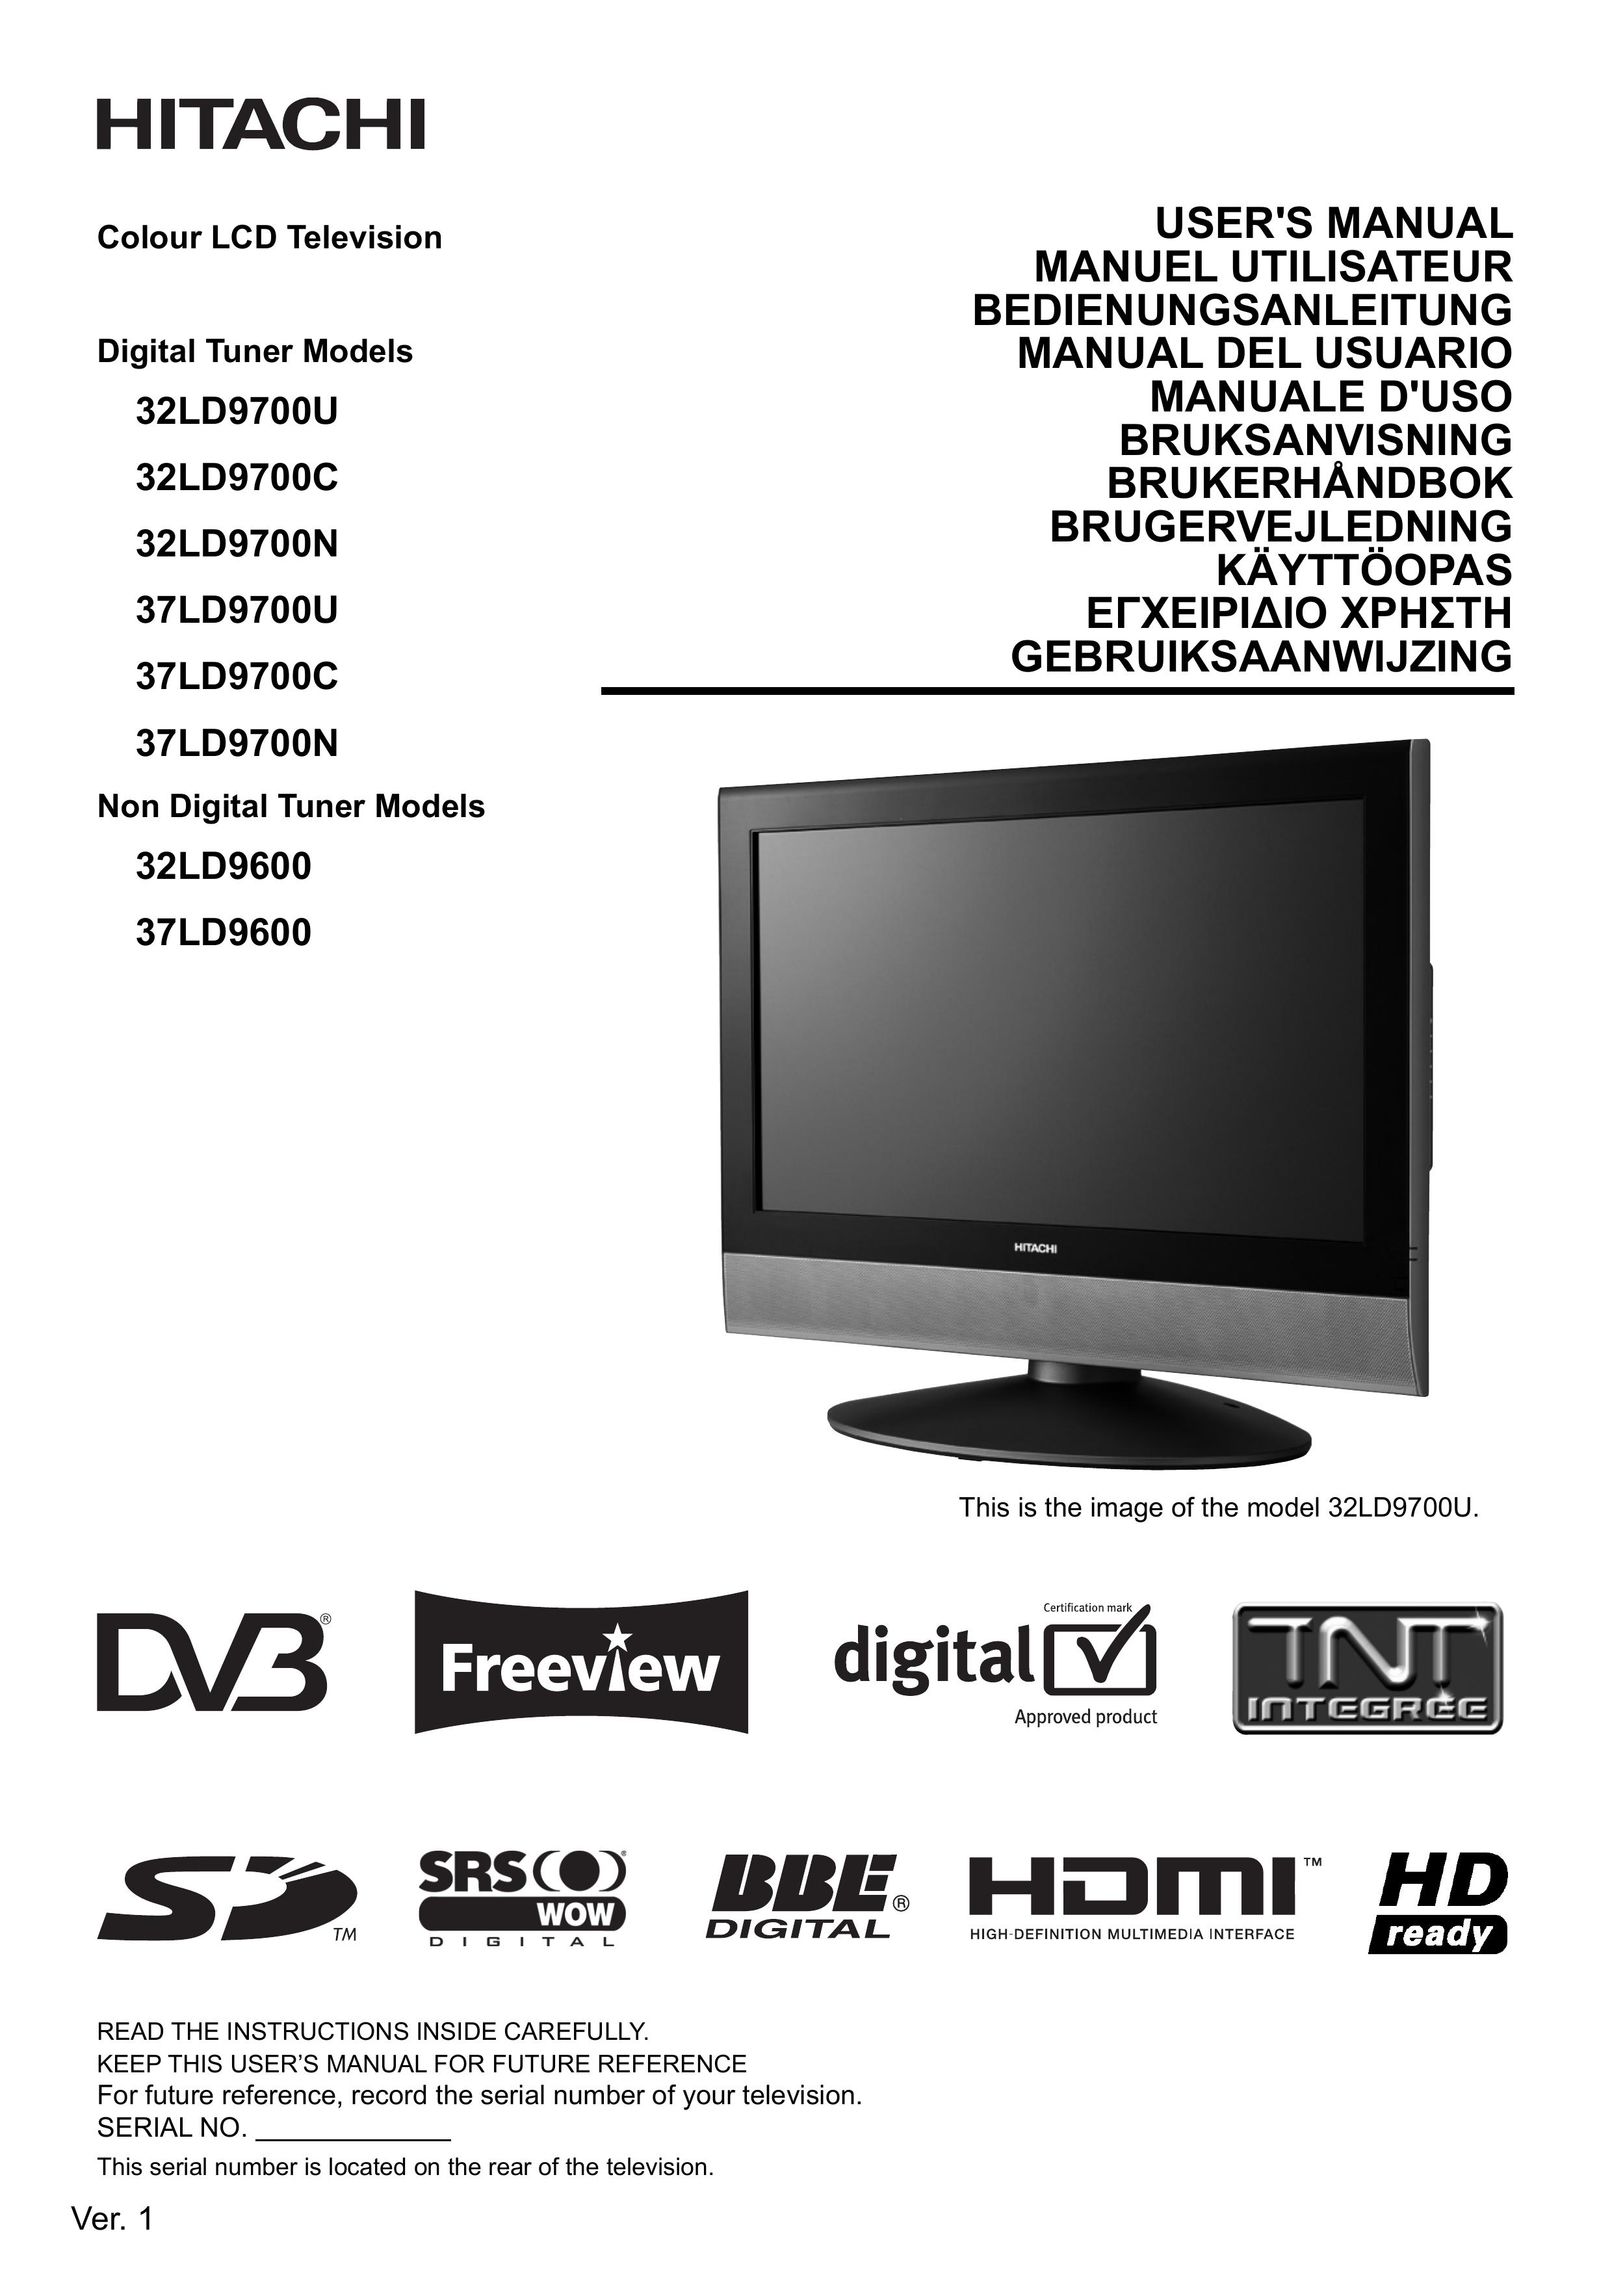 Hitachi 37LD9600 Flat Panel Television User Manual